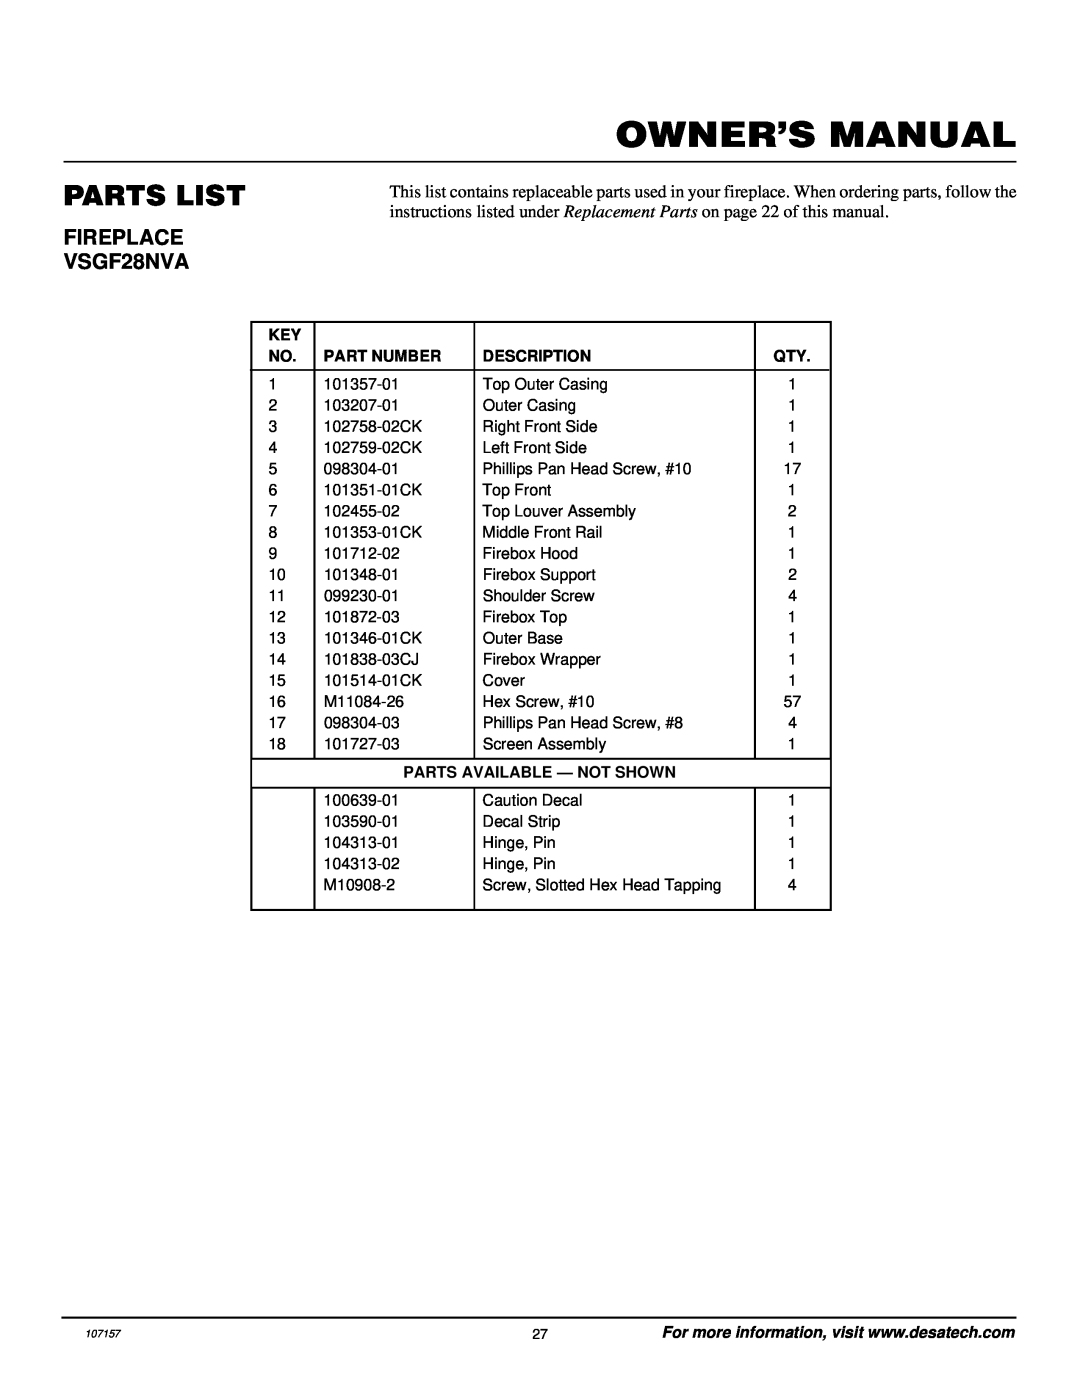 Vanguard Heating VSGF28NTC Parts List, FIREPLACE VSGF28NVA, Part Number, Description, Parts Available - Not Shown 